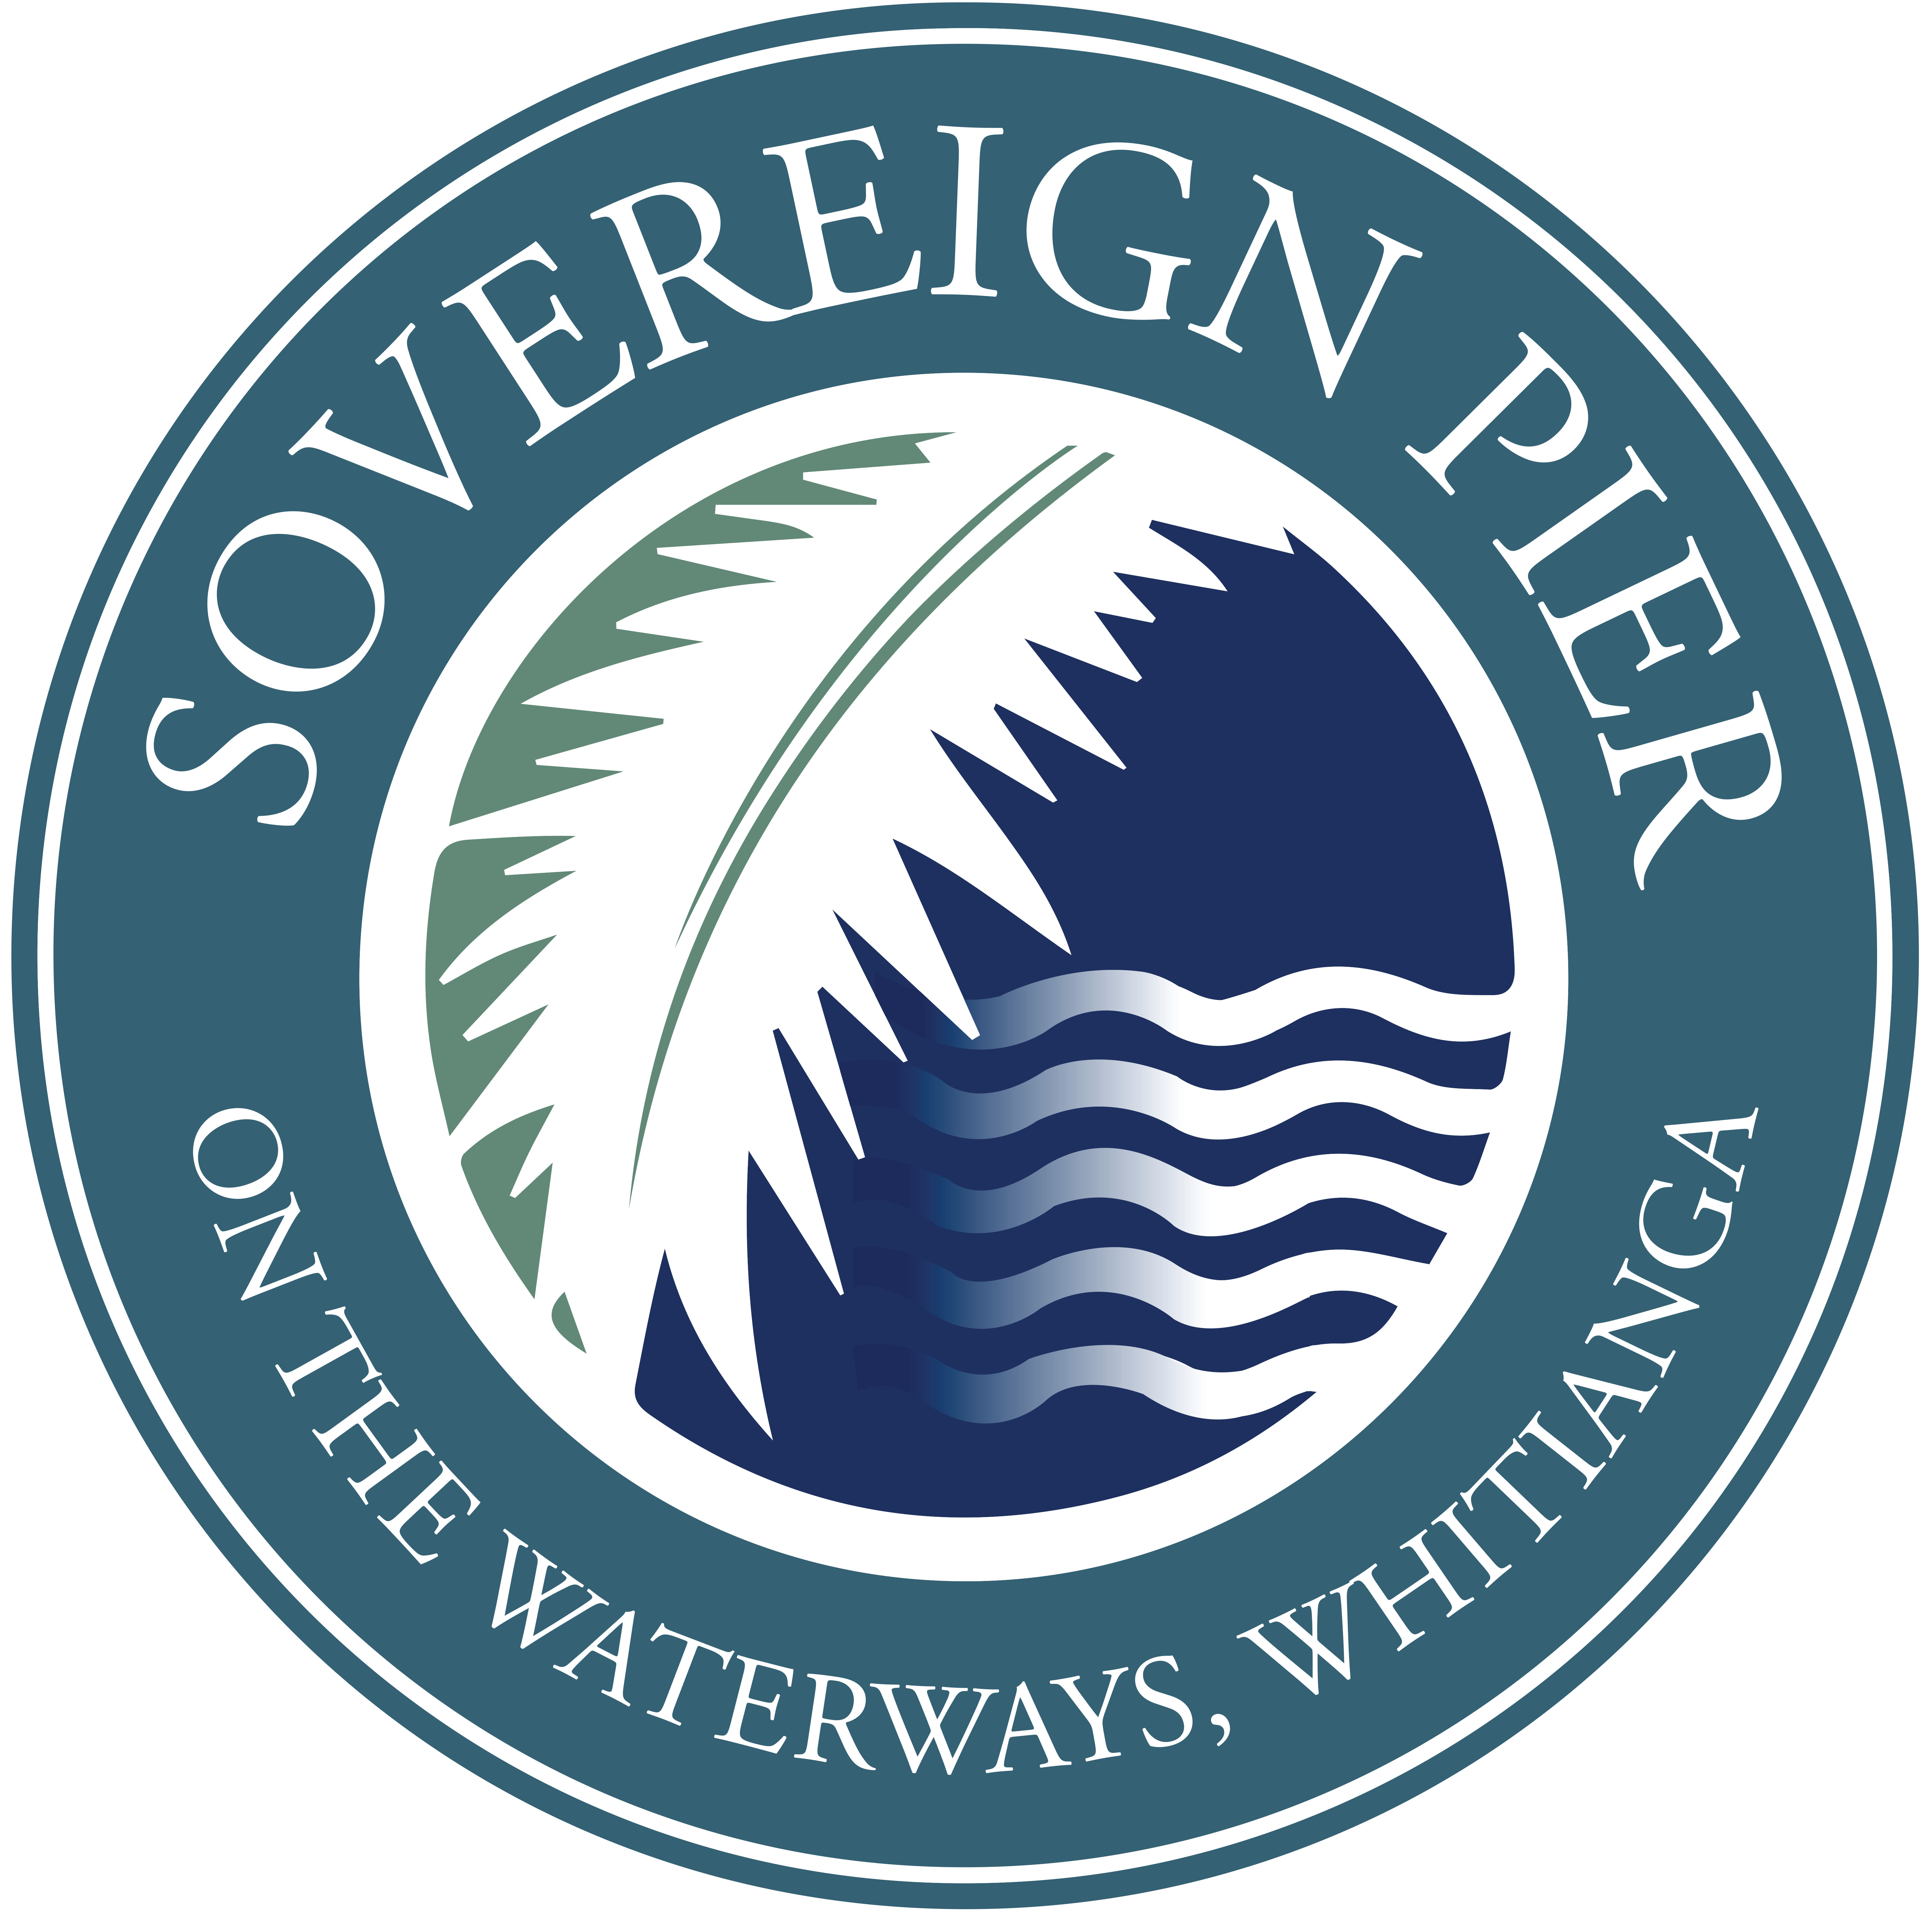 Sovereign Pier On The Waterways